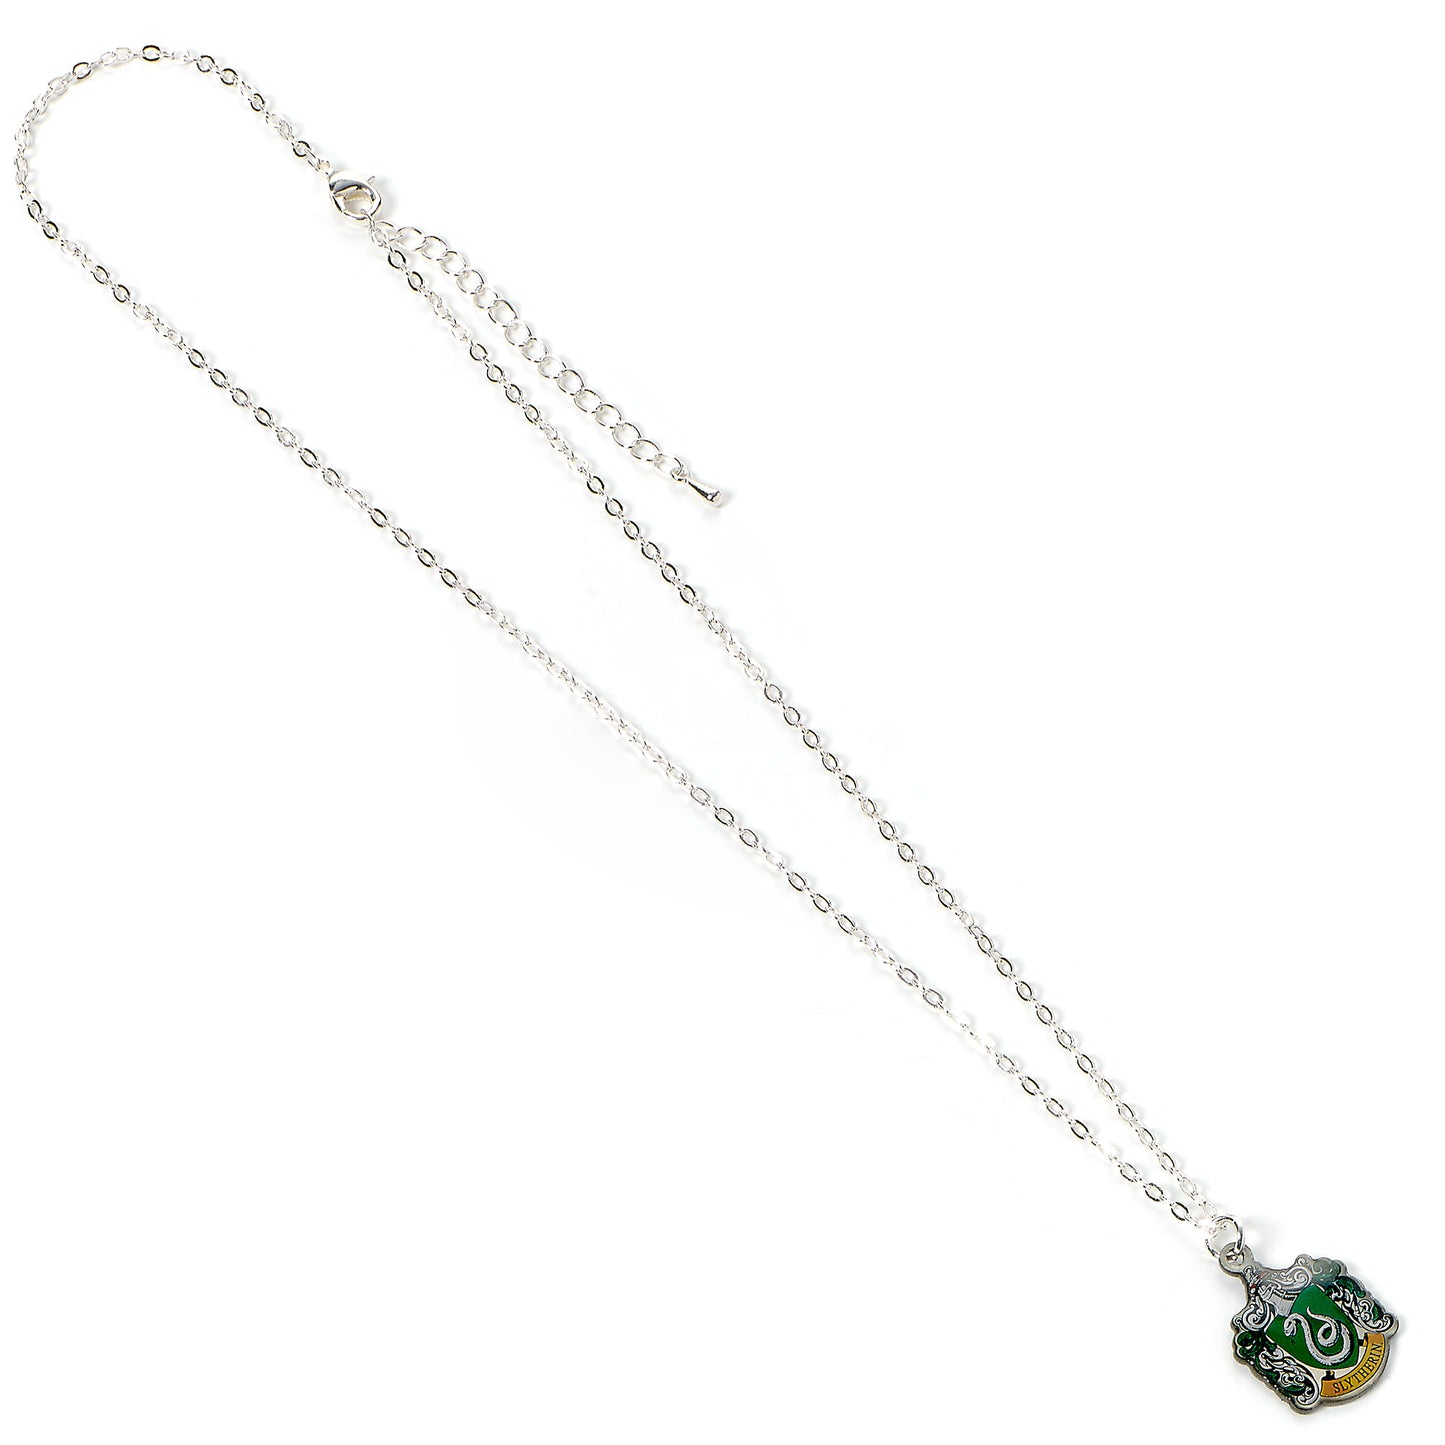 Harry Potter Slytherin Crest Necklace - Green